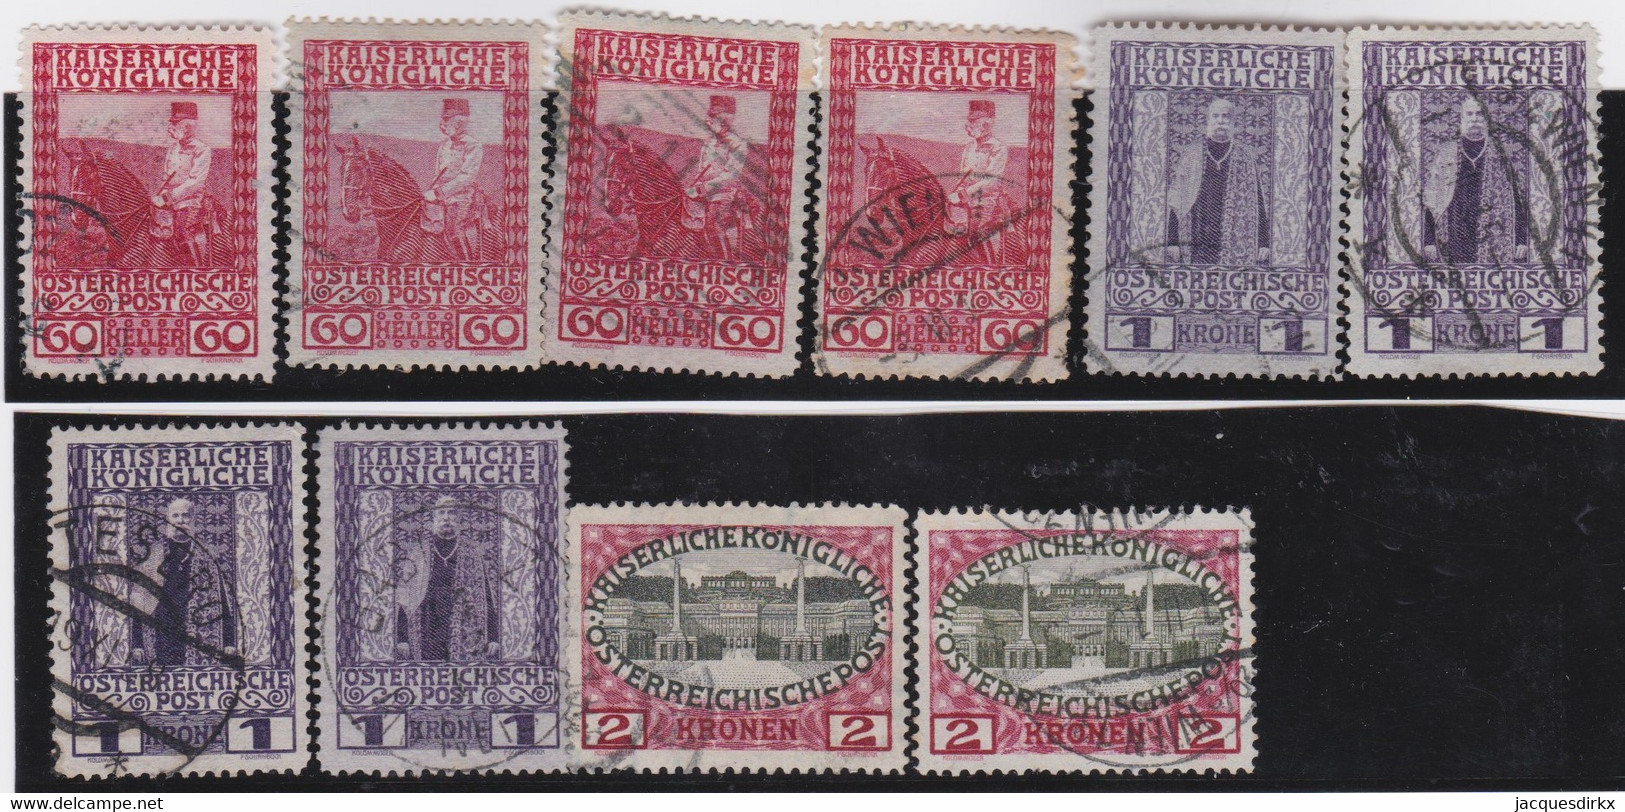 Österreich   .   Y&T   .   10 Marken      .   O       .   Gestempelt     .   /    .  Cancelled - Used Stamps